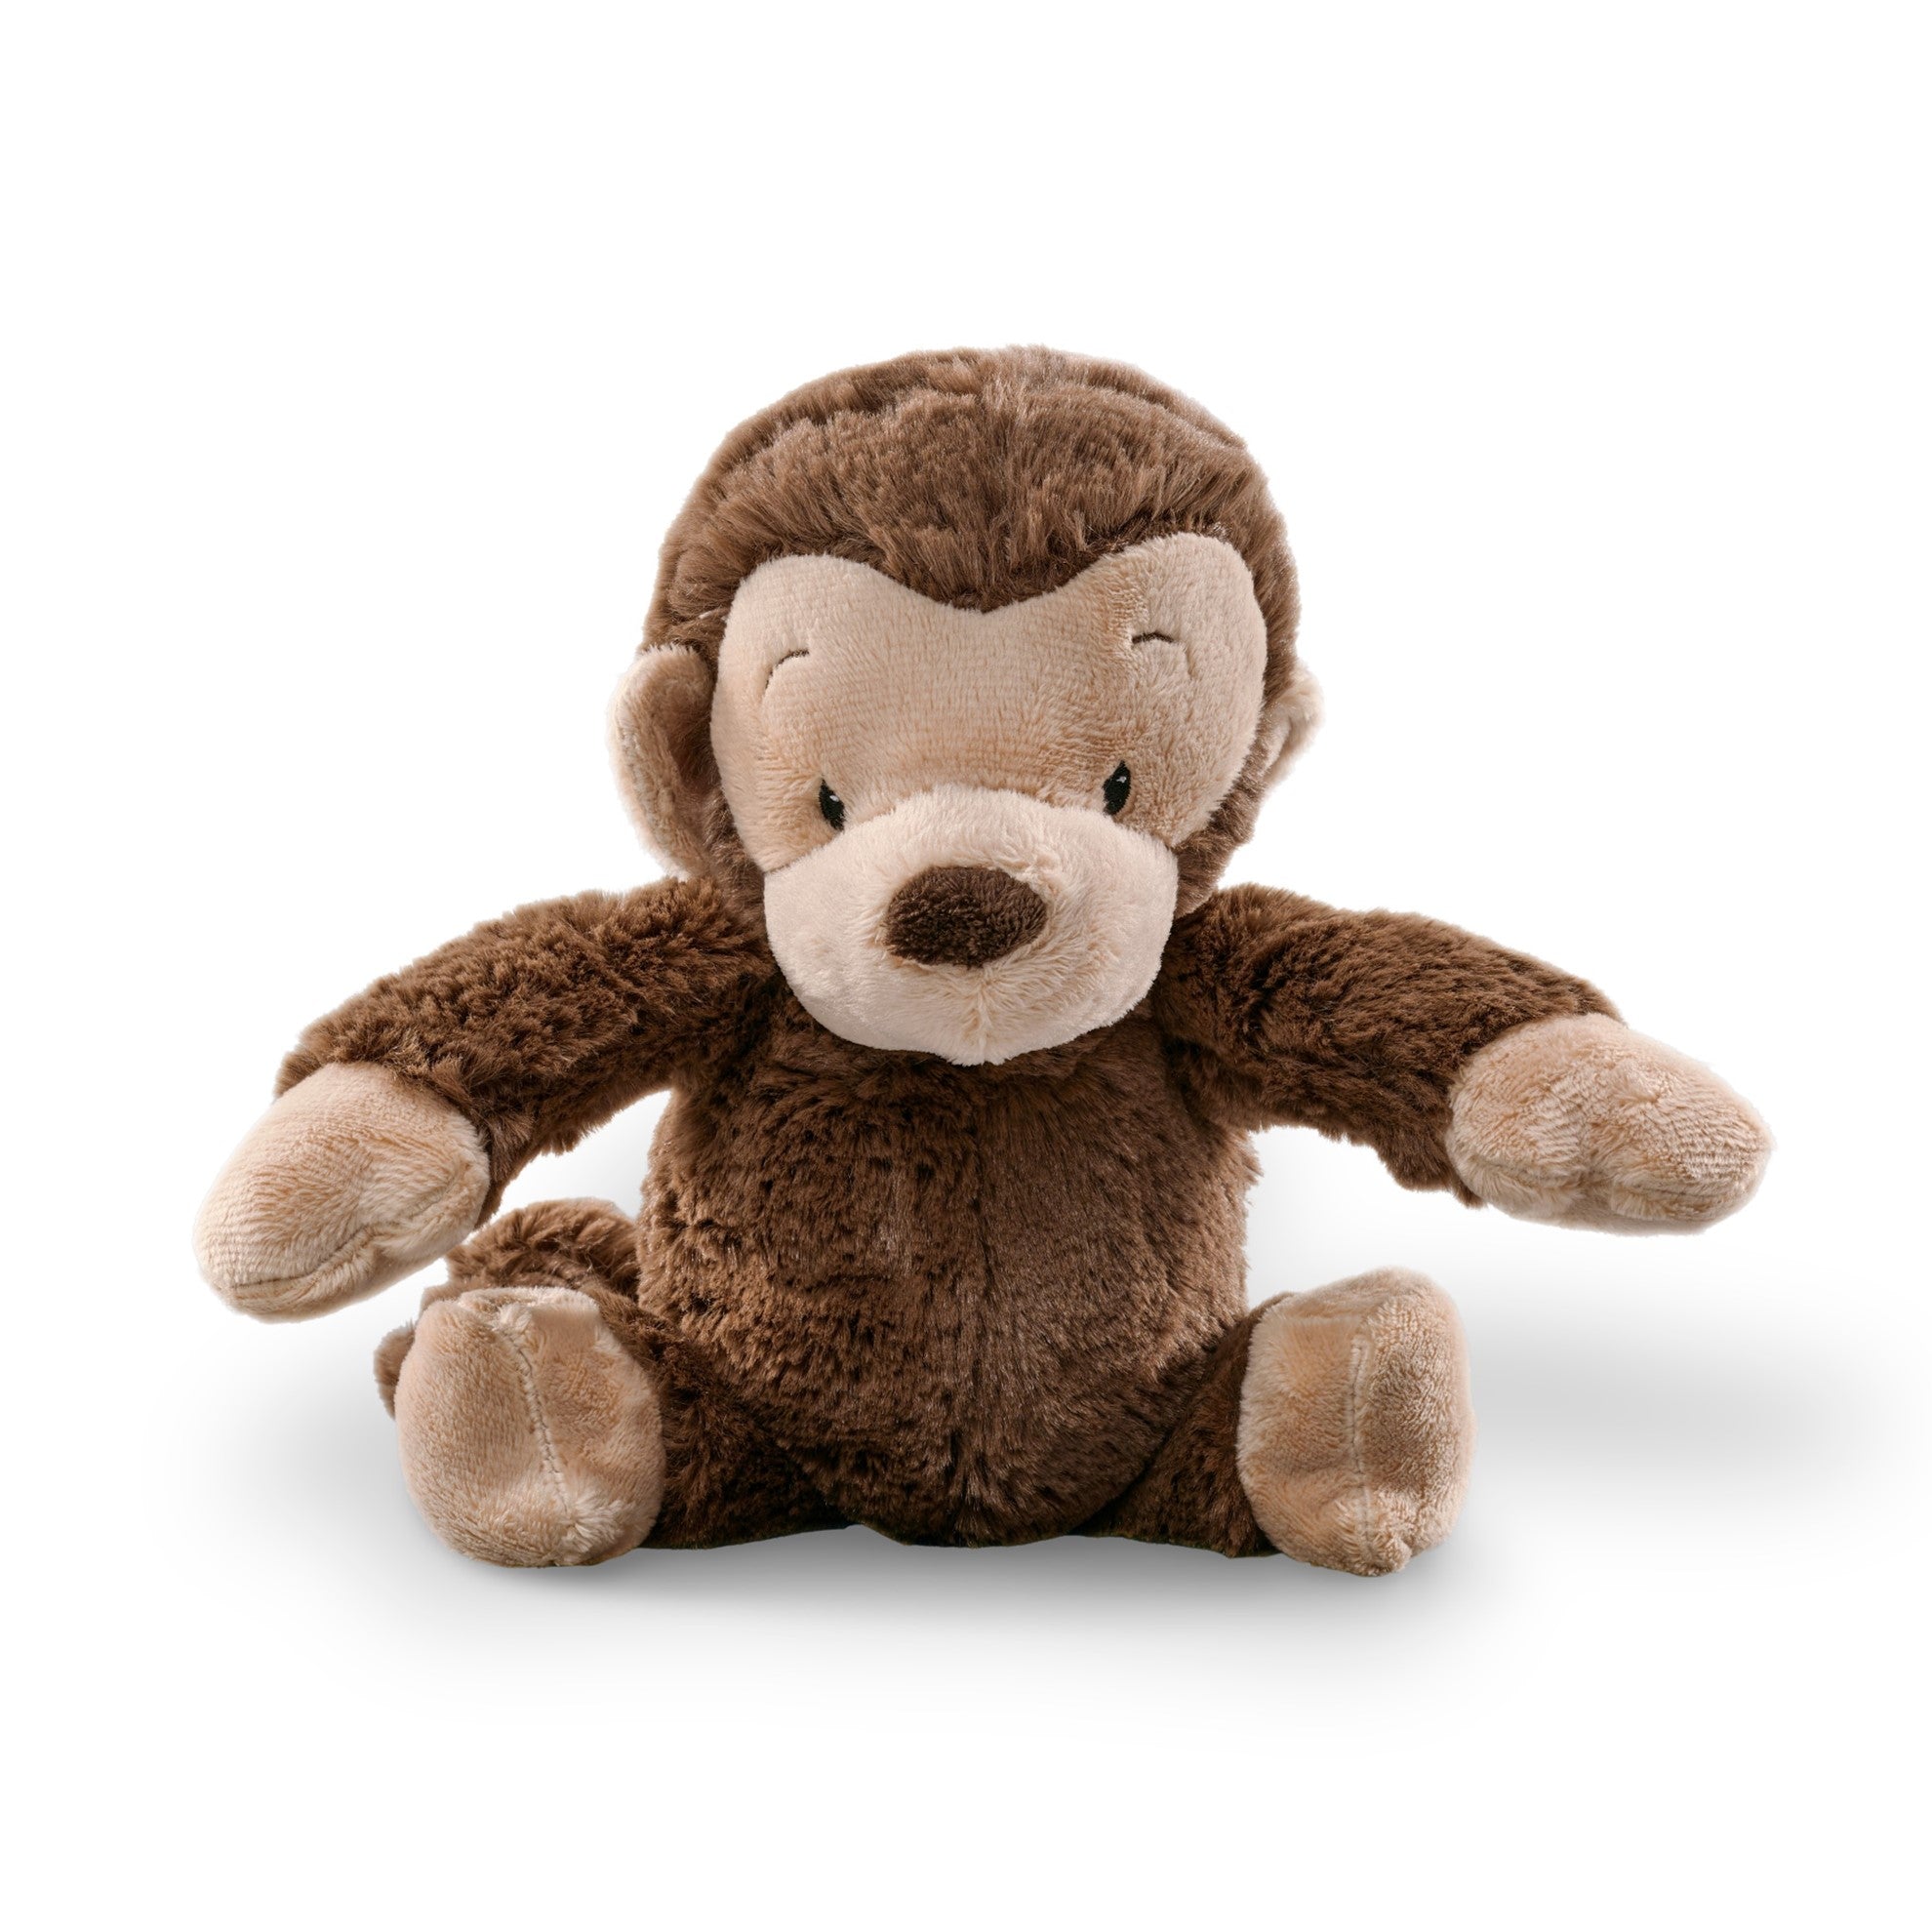 Mago Monkey - WWF-Canada